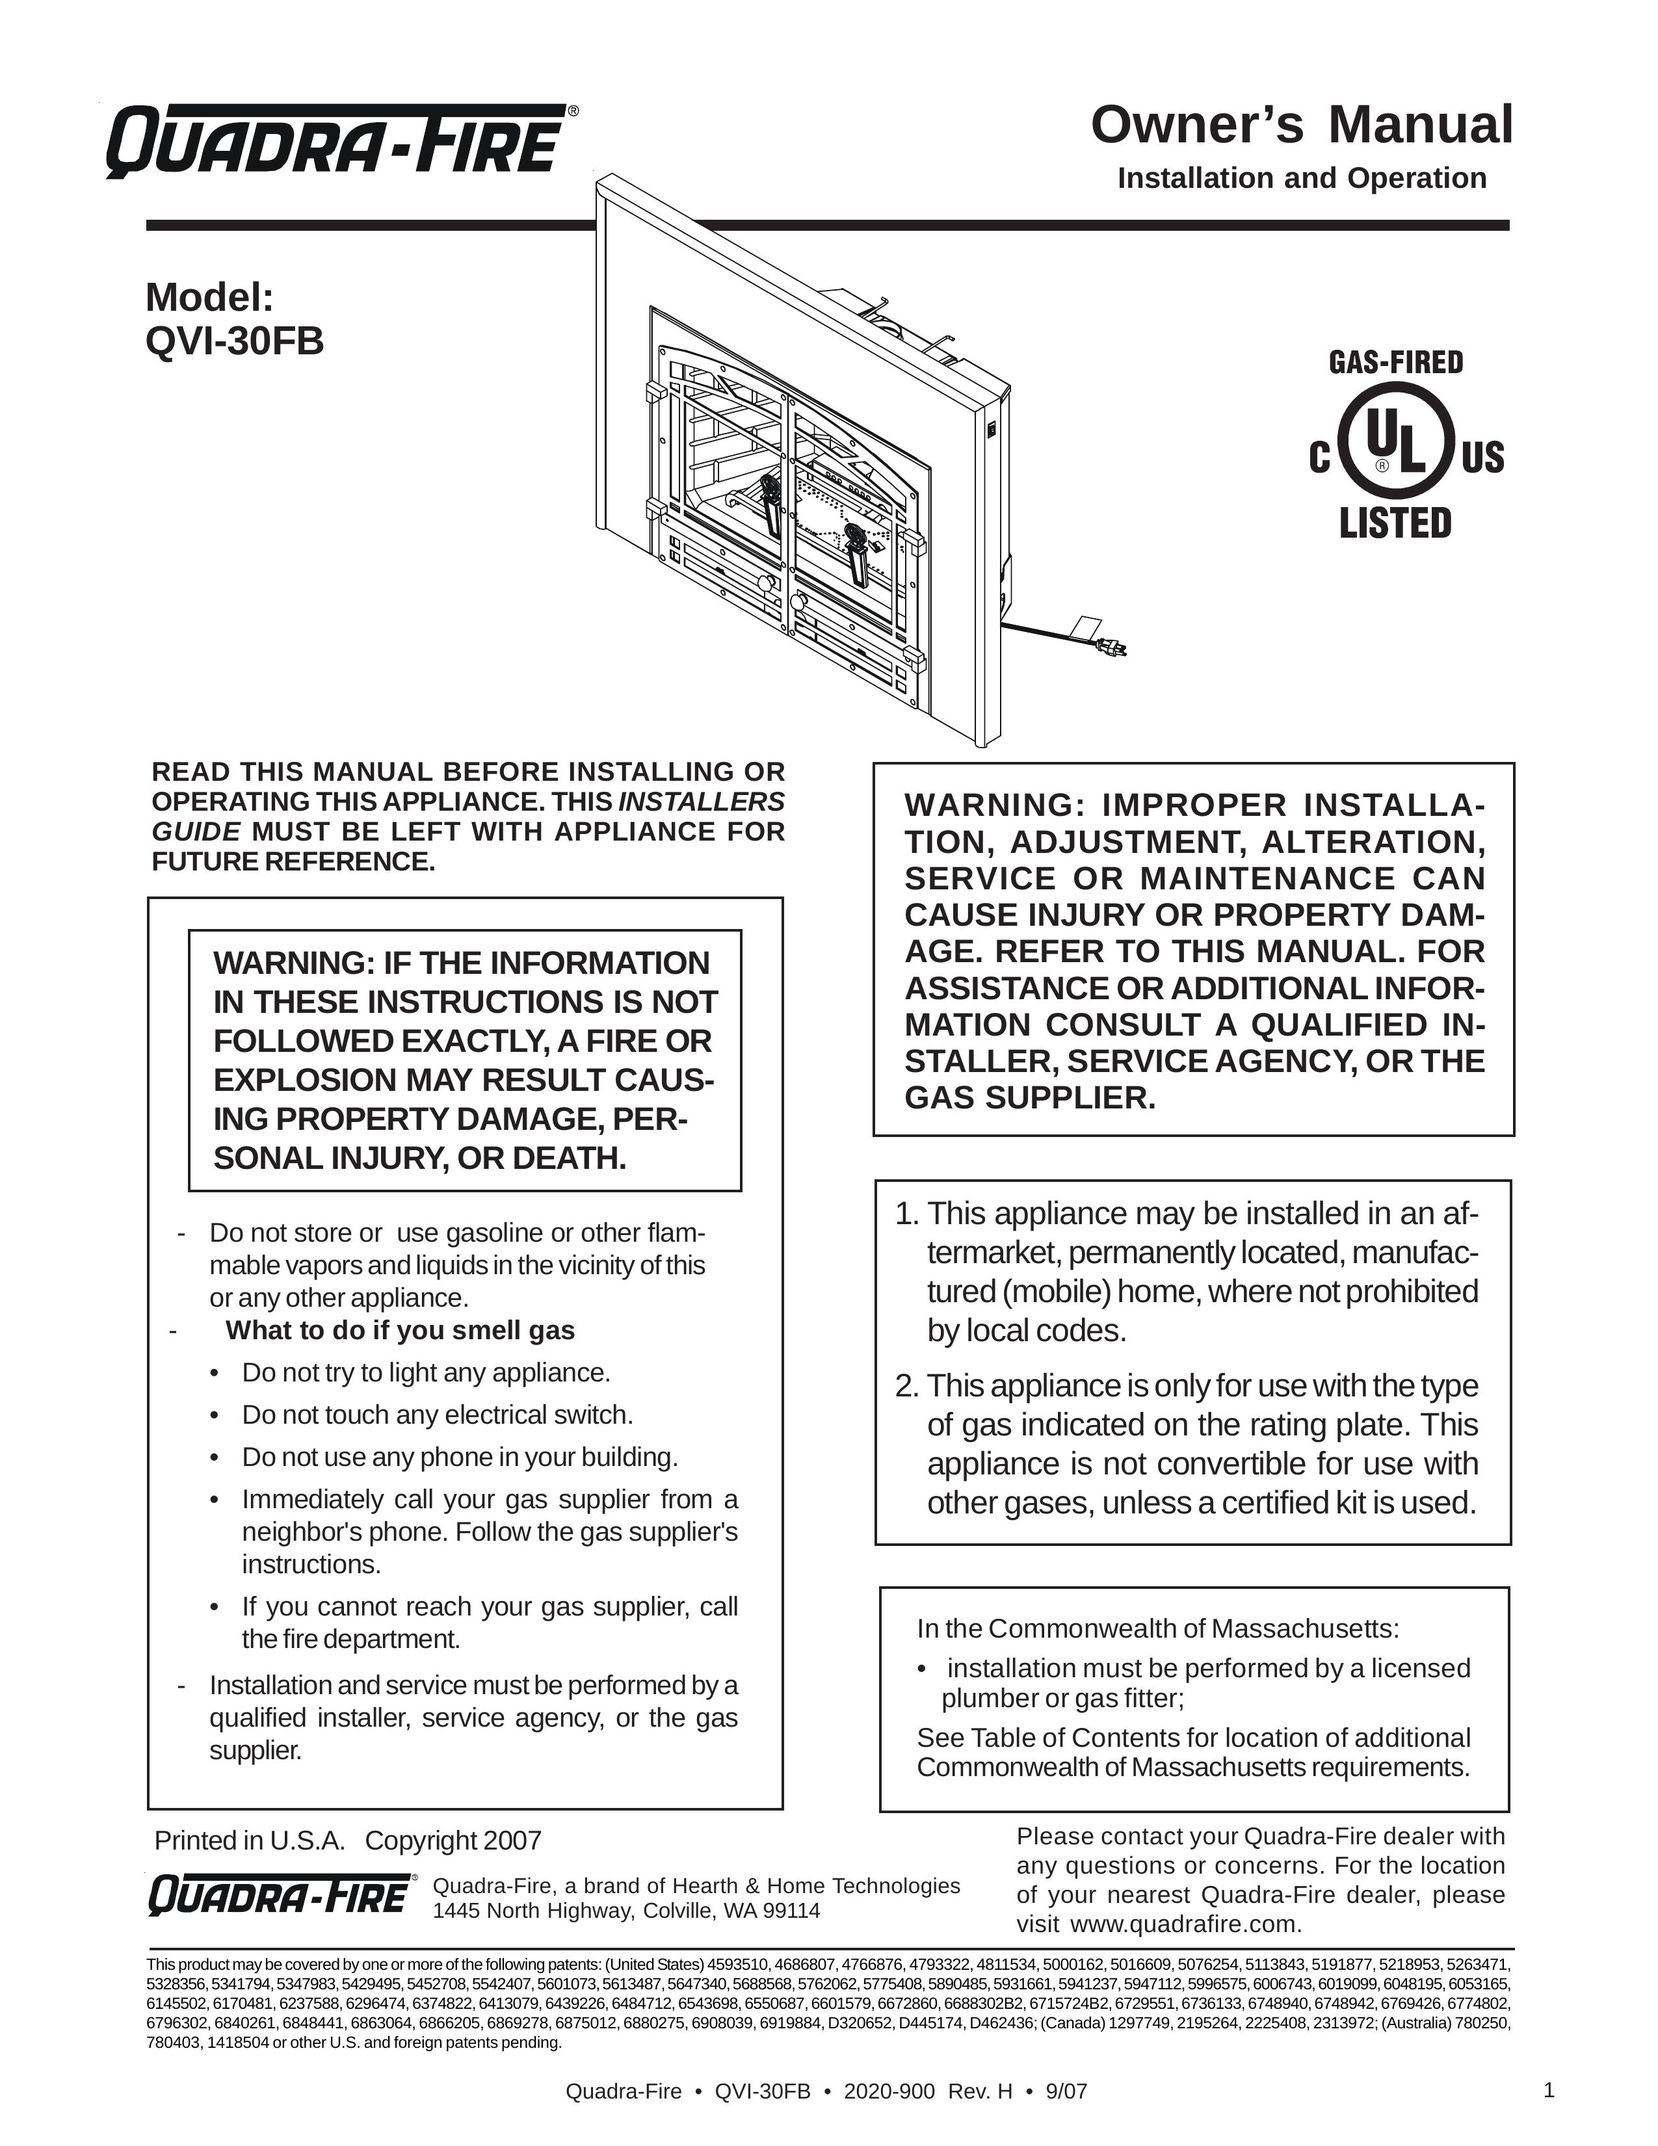 Quadra-Fire QVI-30FB Indoor Fireplace User Manual